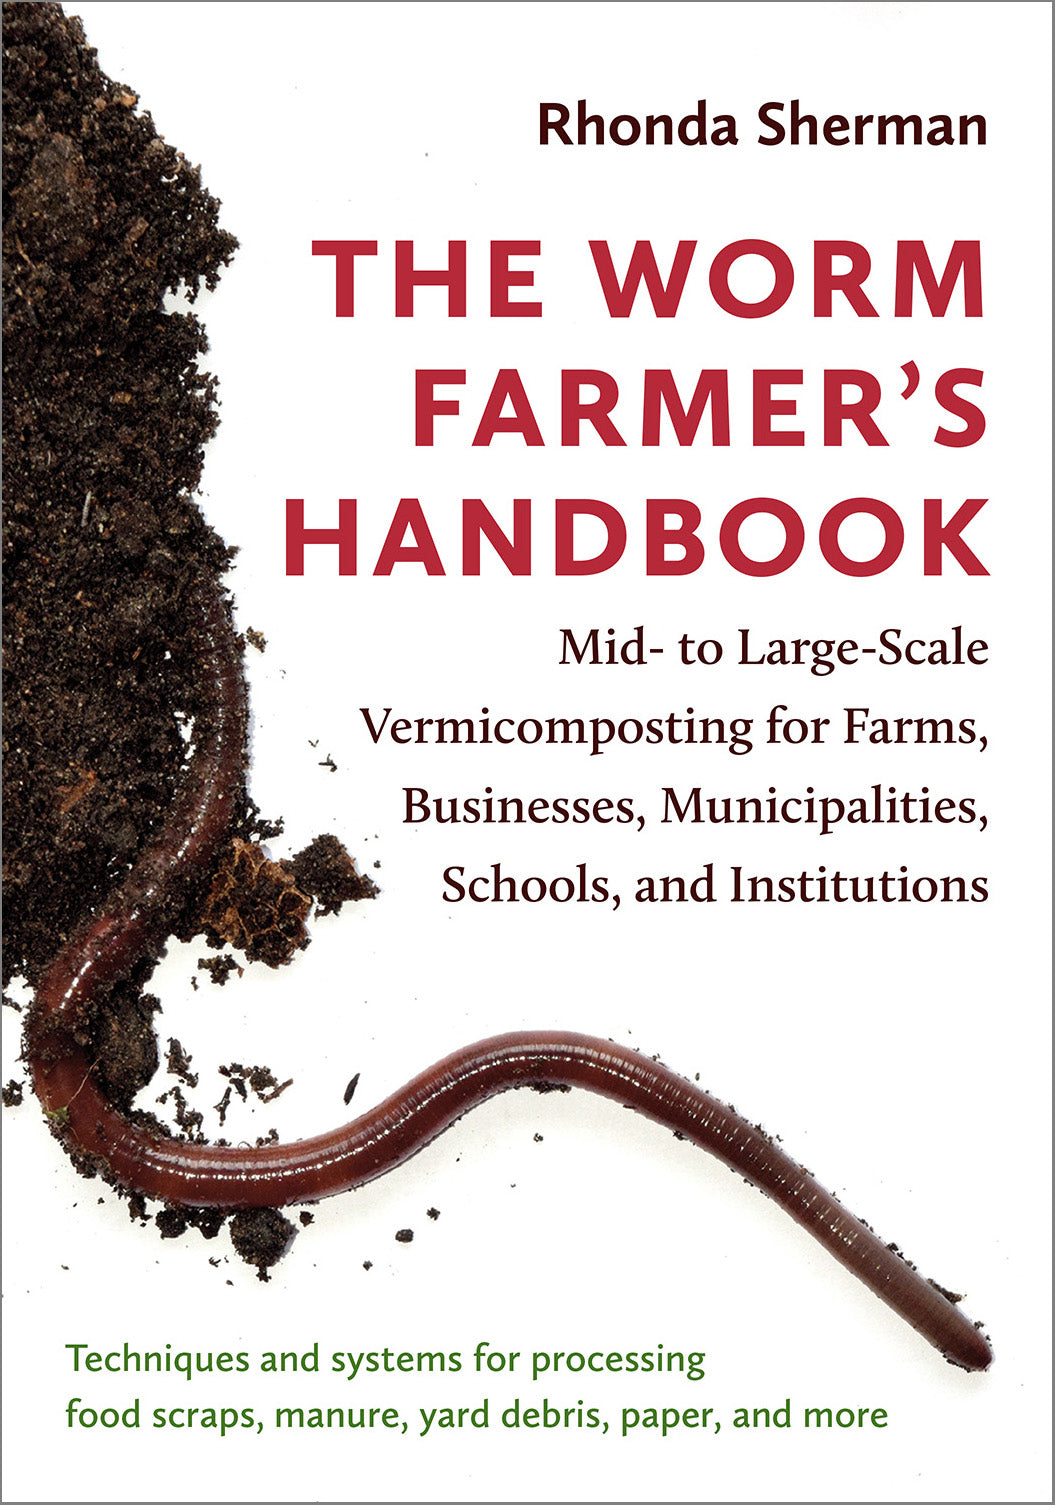 Worm Farmers Handbook by Rhonda Sherman Press Release Meme's Worms